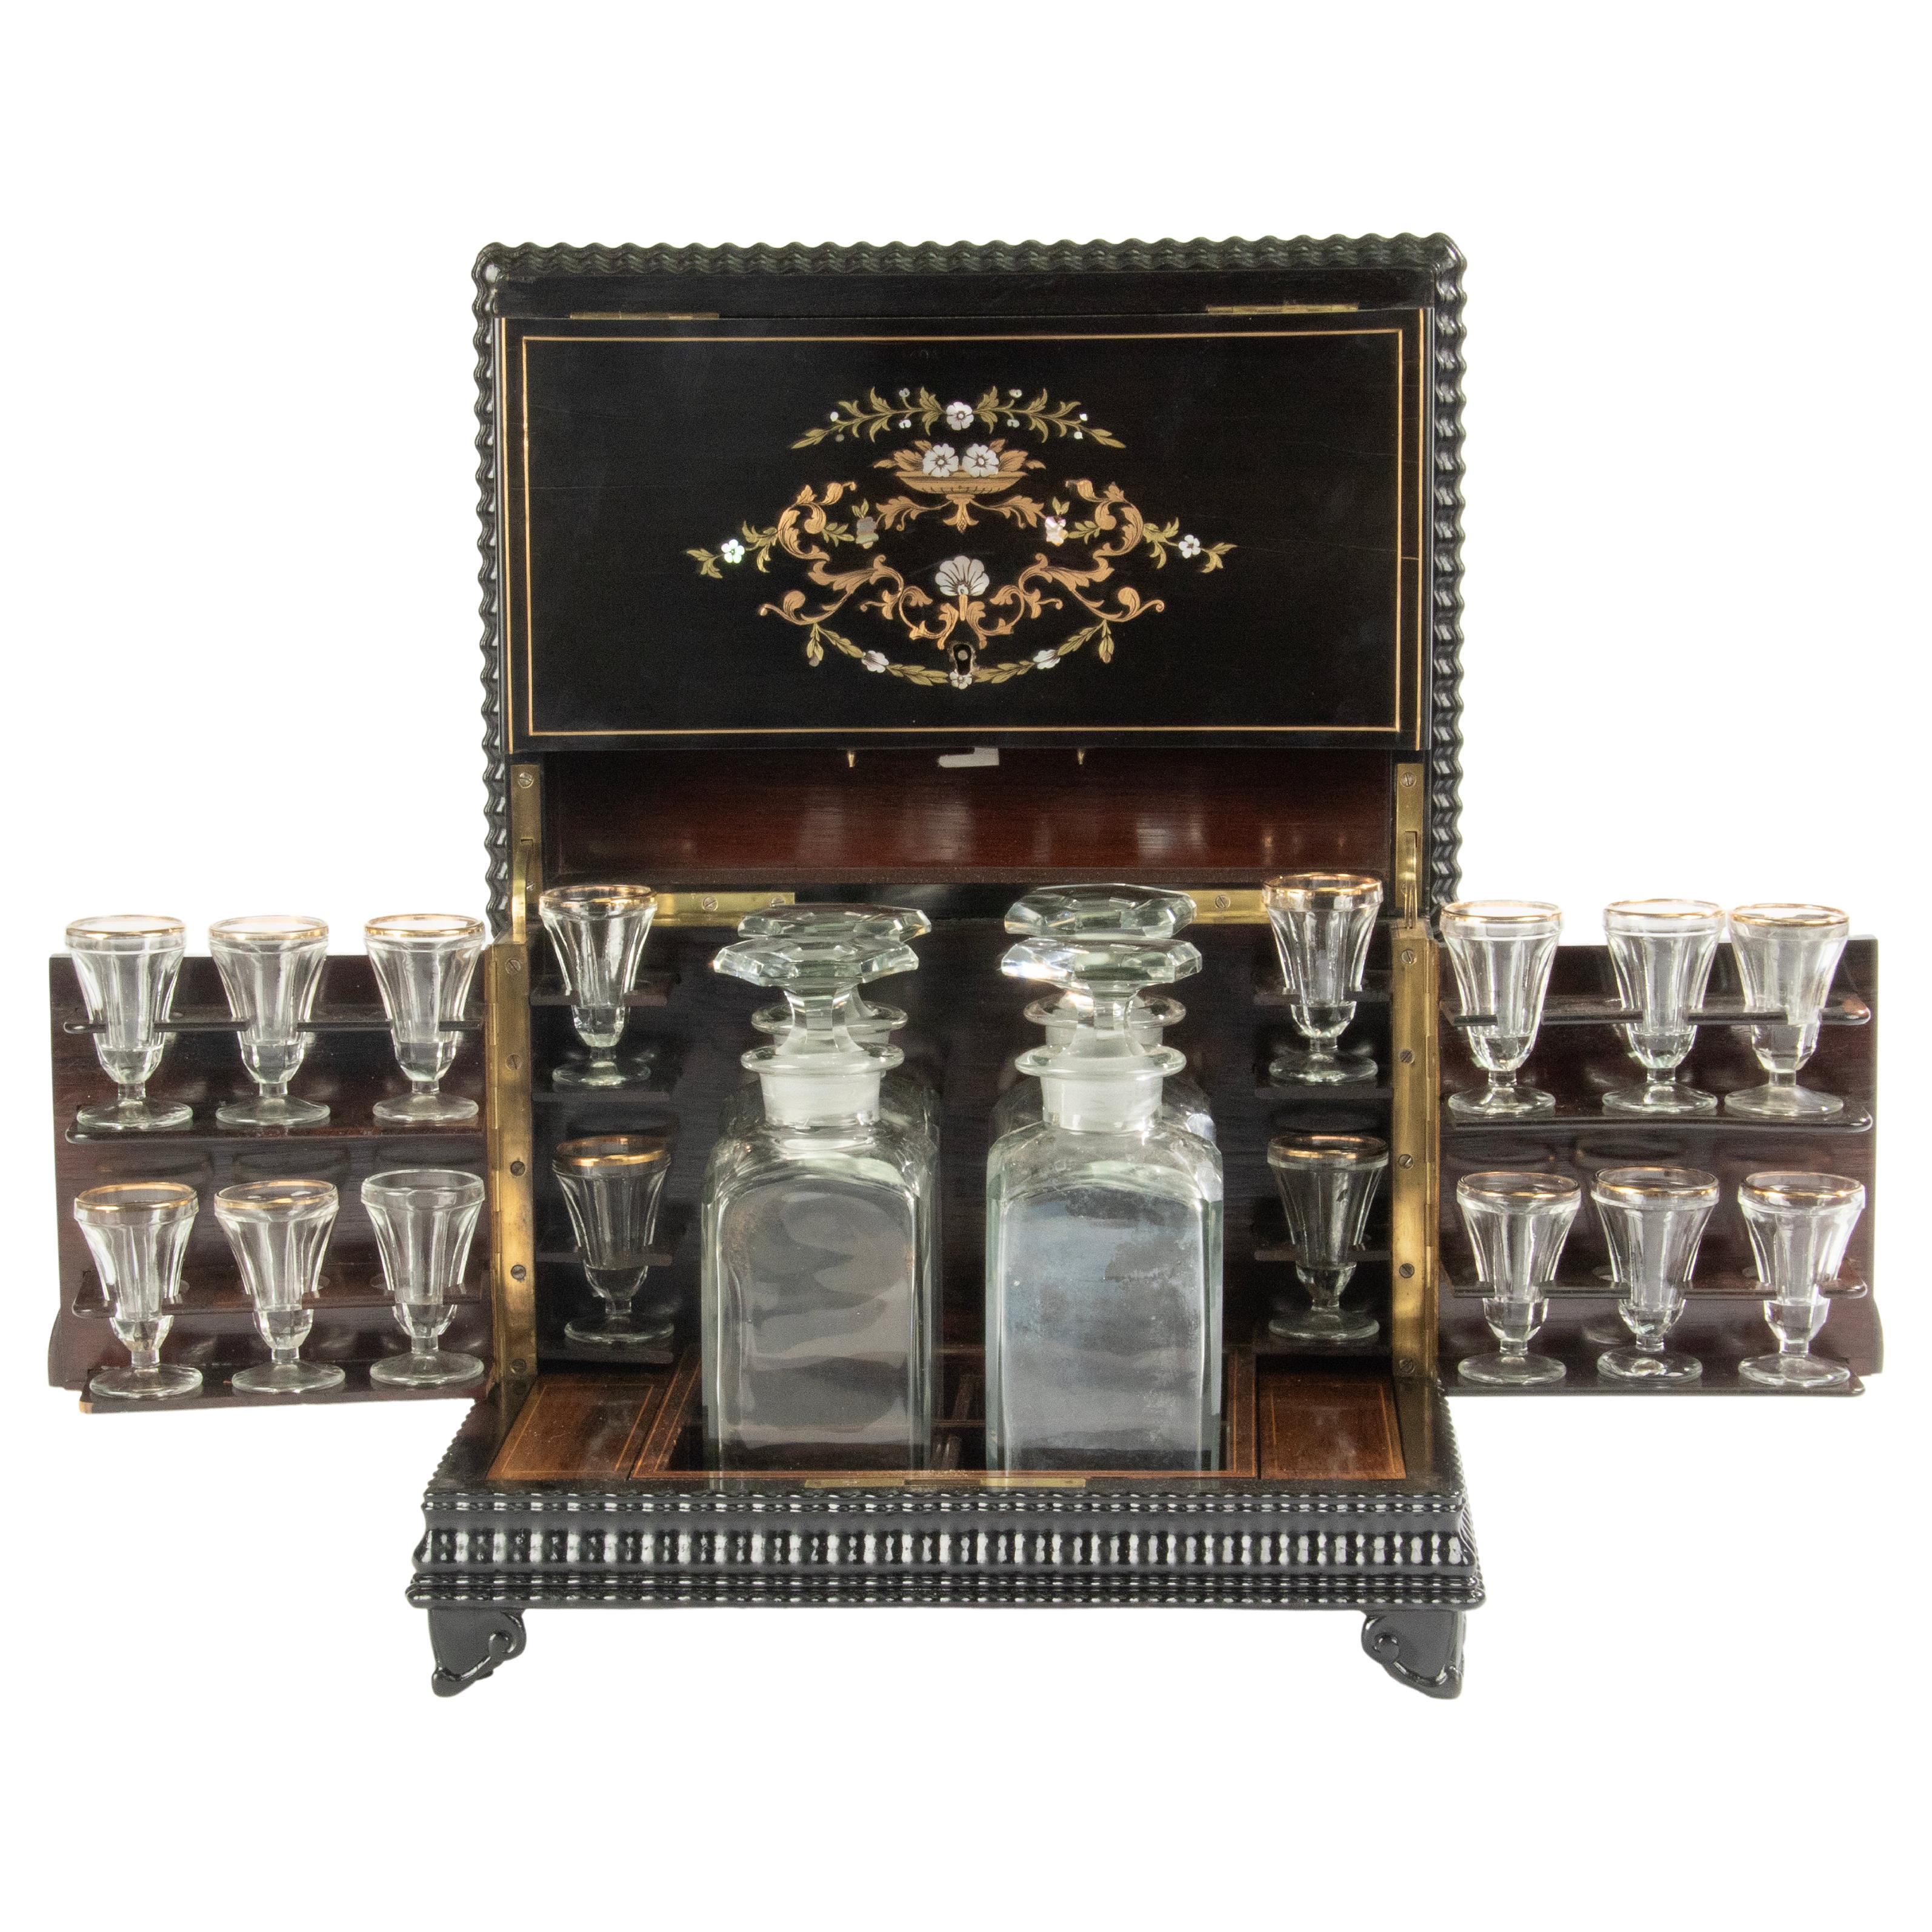 19th Century French Liquor Cabinet Napoleon III with Crystal Interior